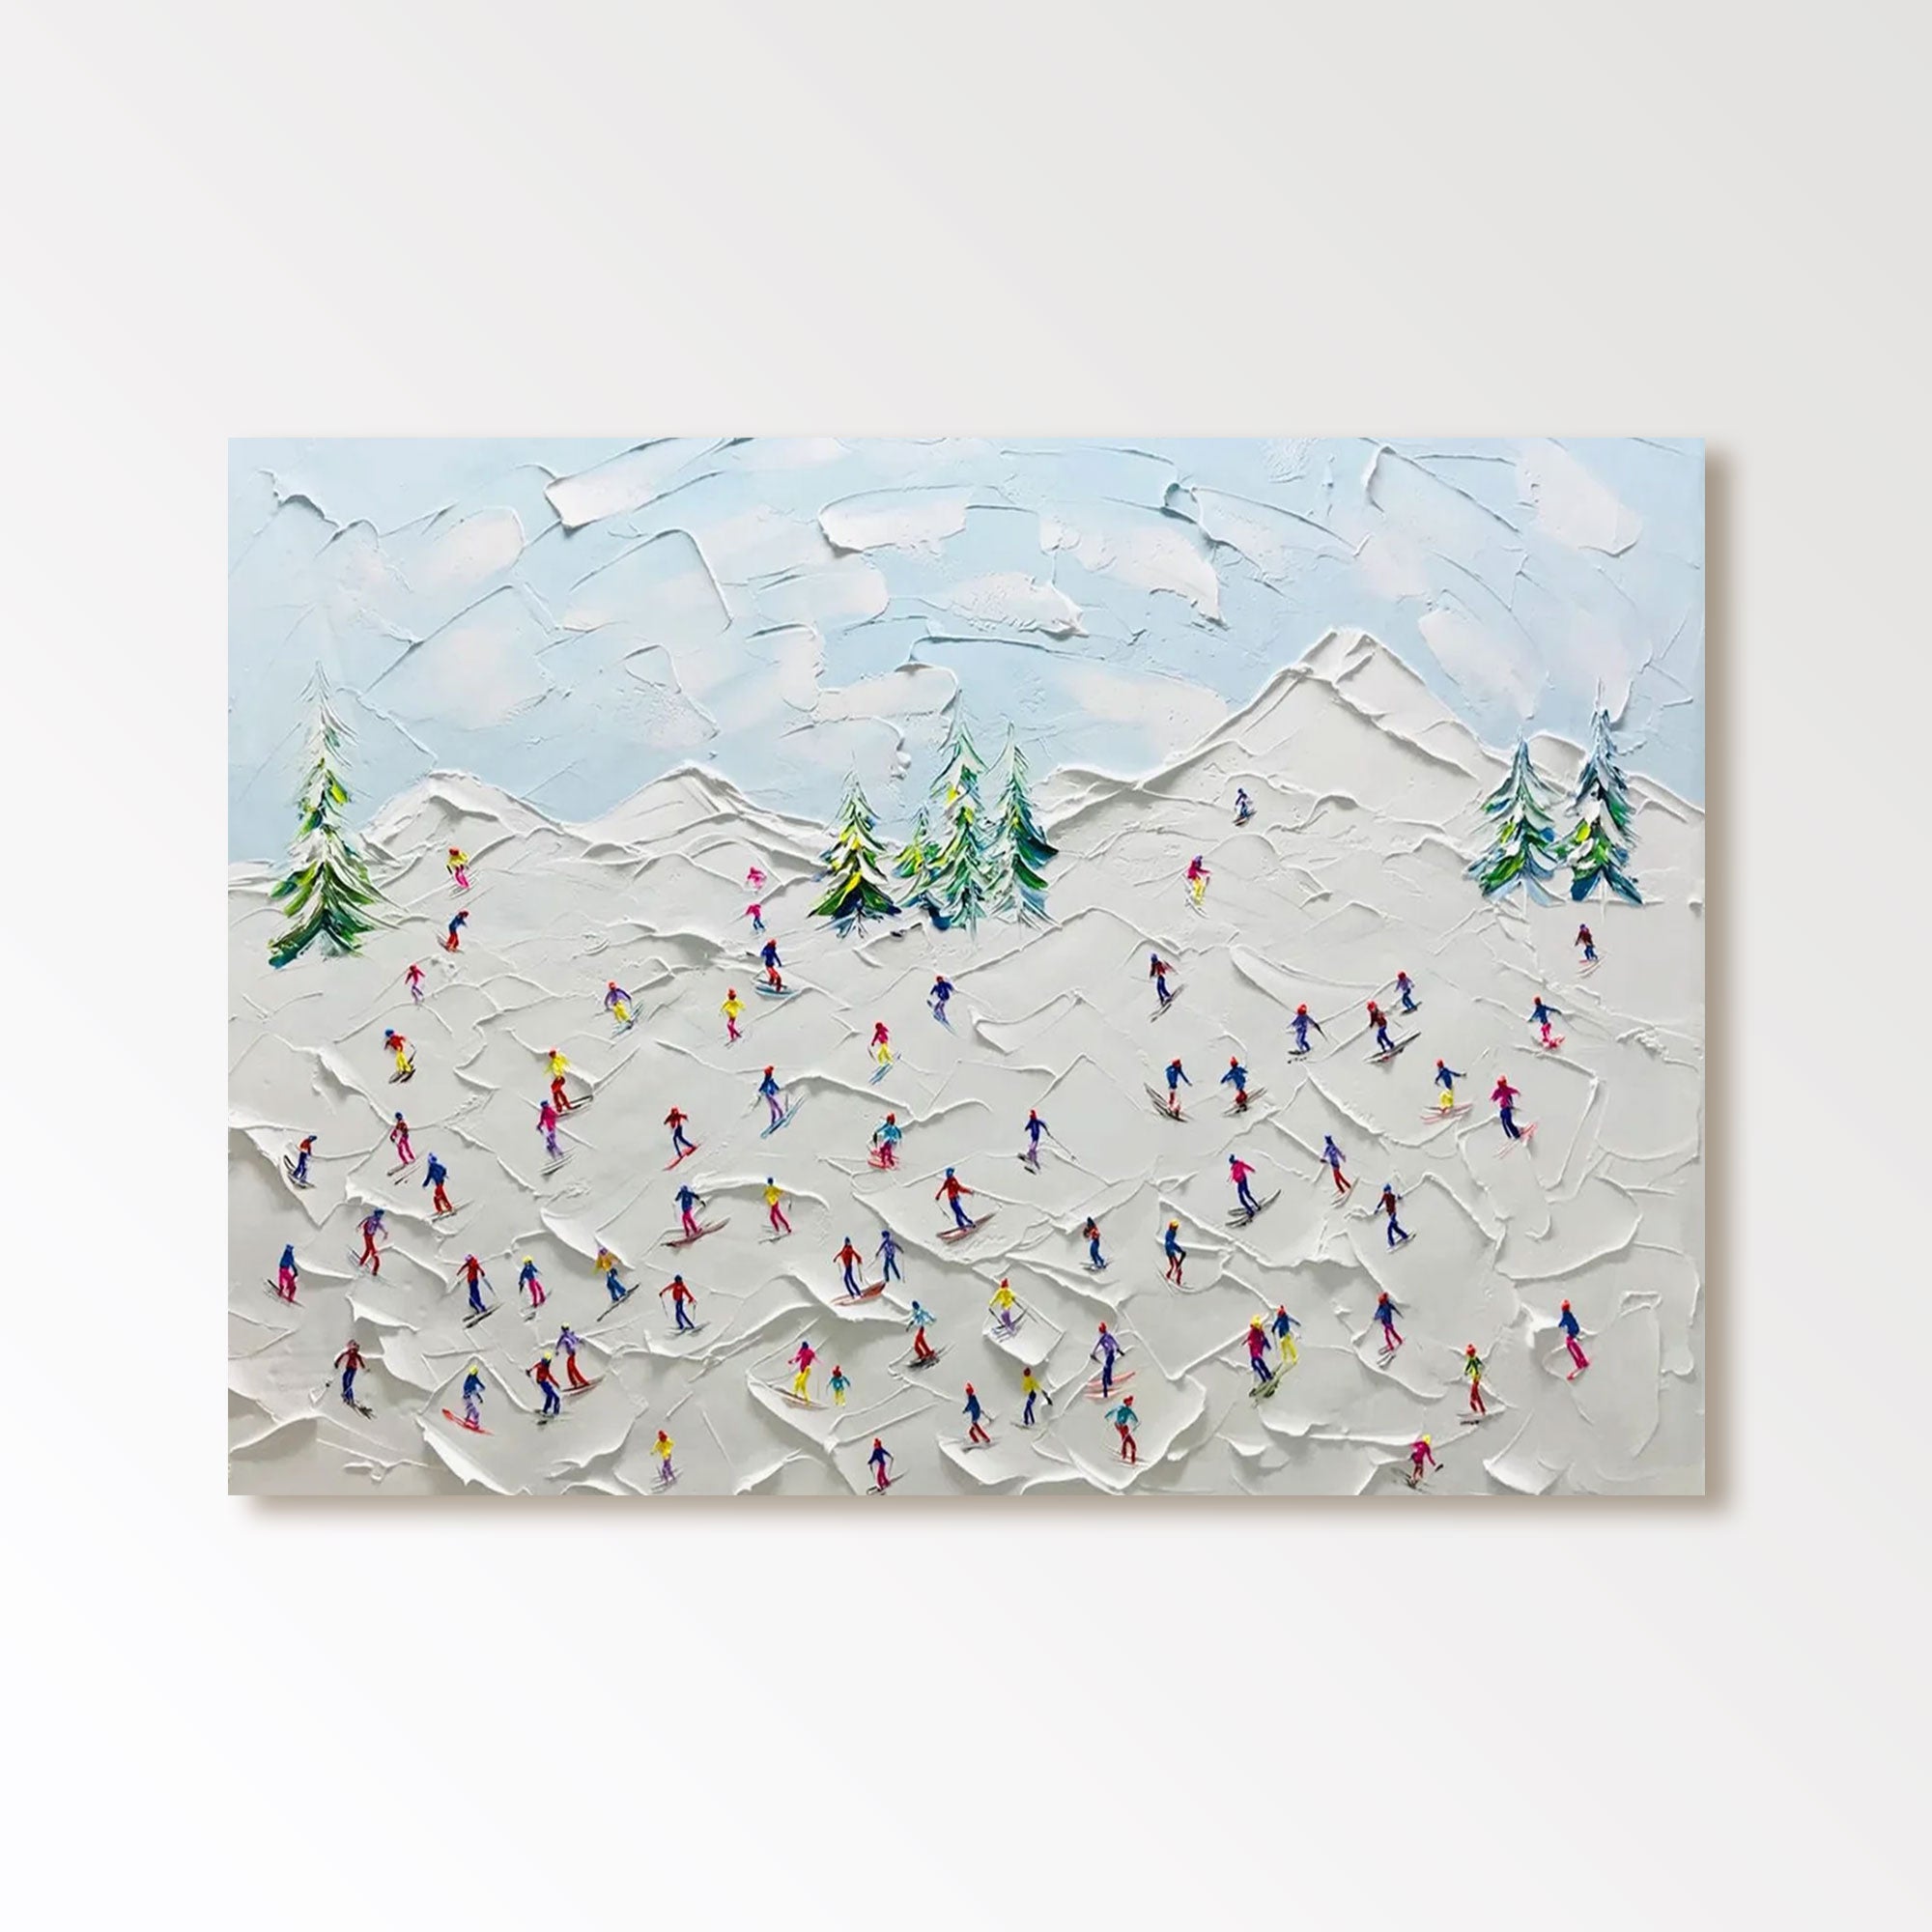 Textured Painting "Winter's Joy“